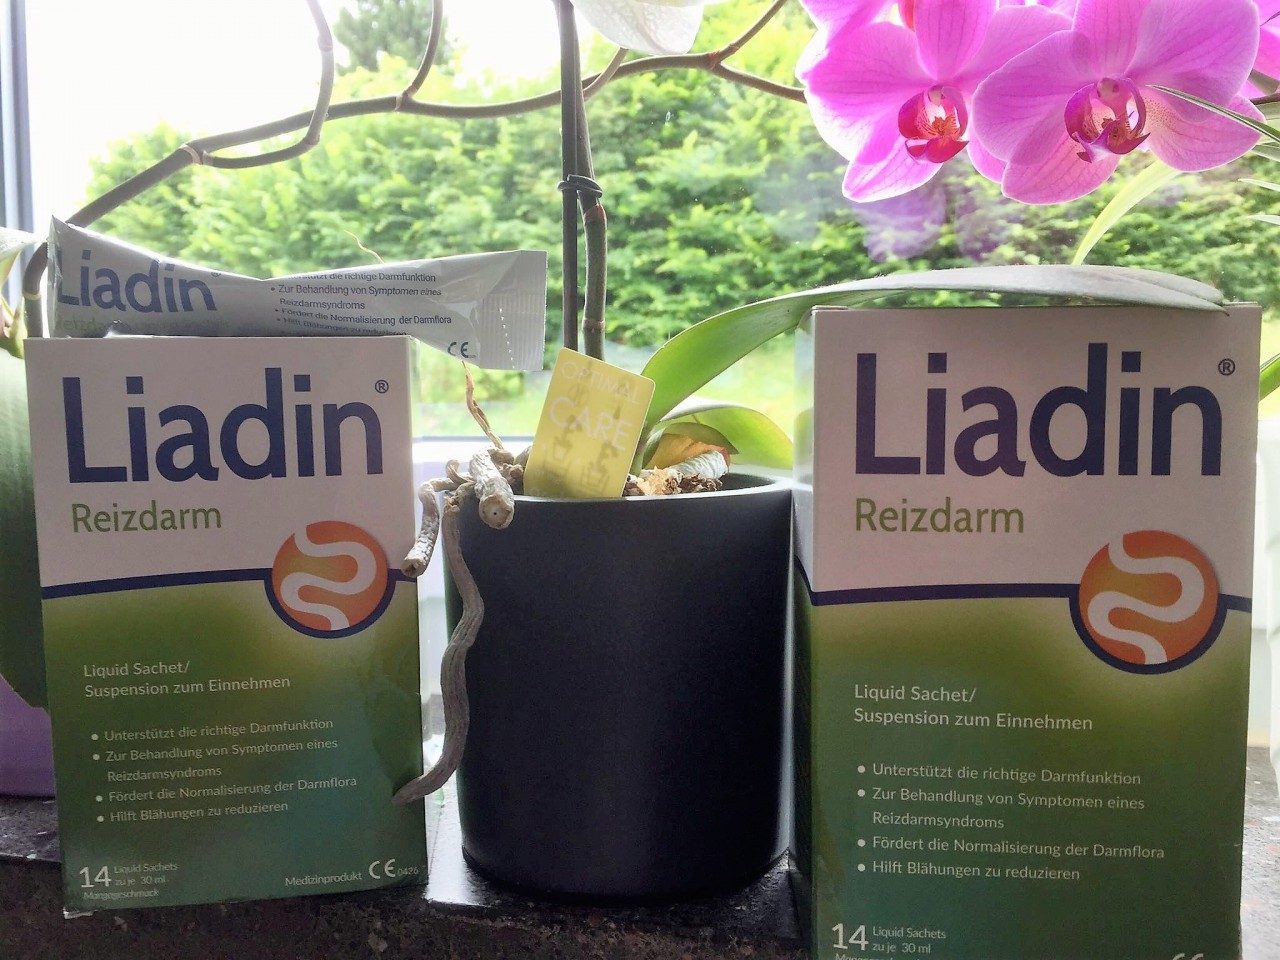 liadin liquid sachet - 4